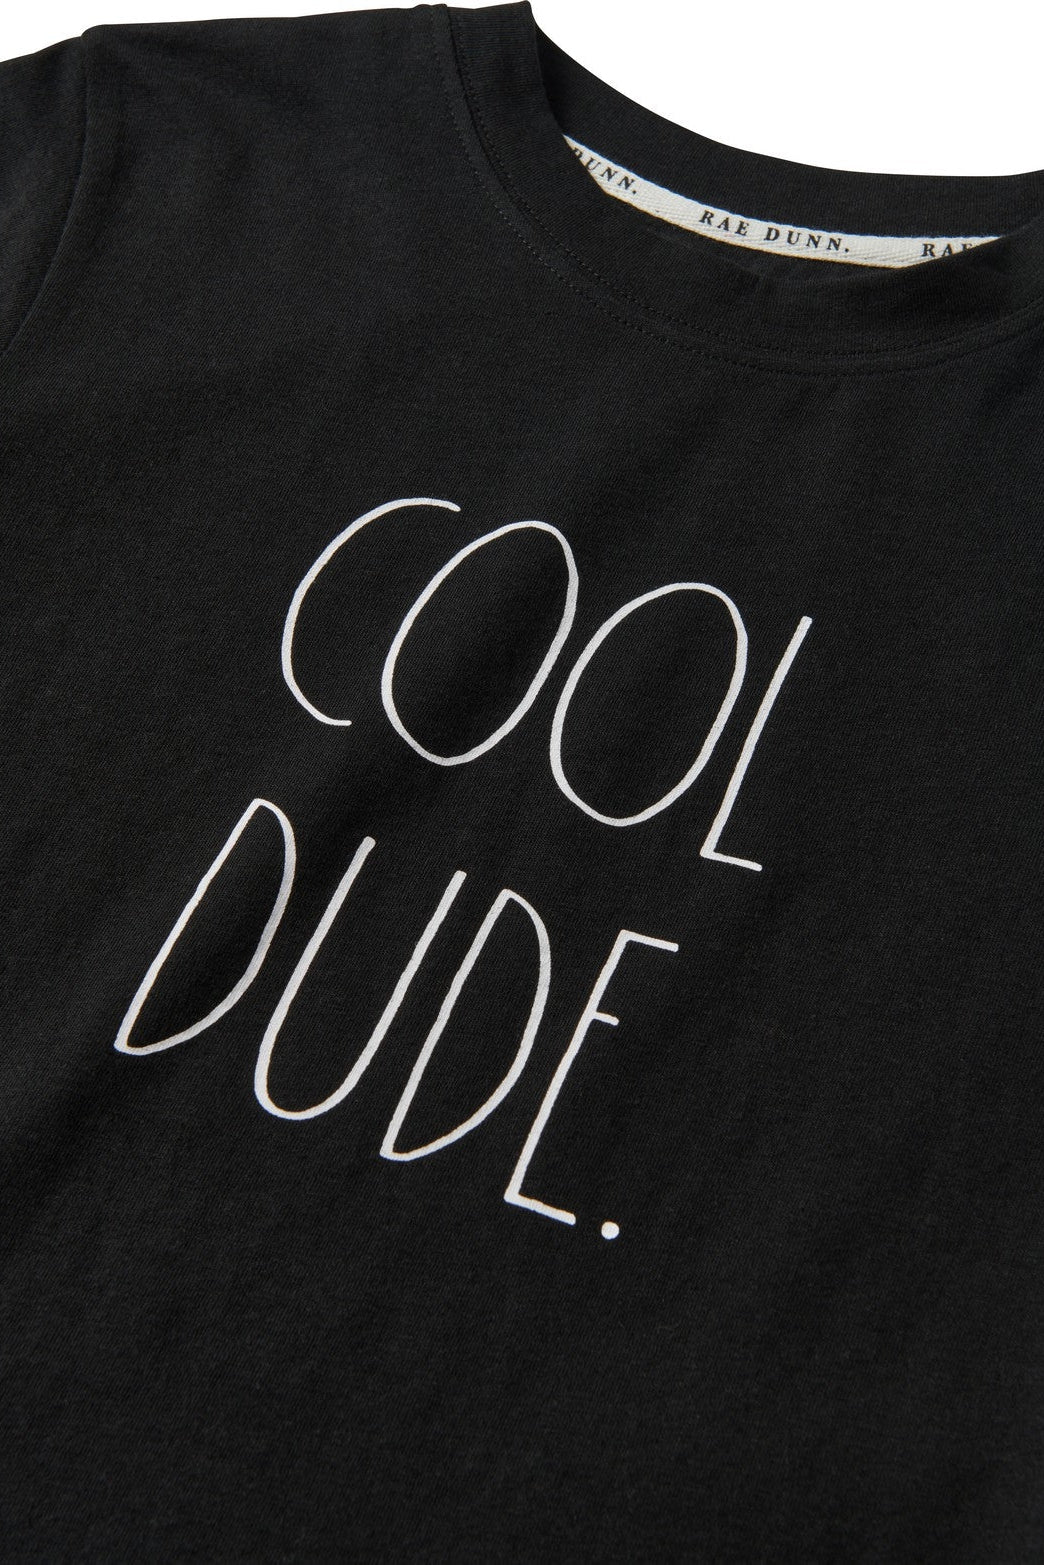 Boys "COOL DUDE" Short Sleeve T-Shirt Set of 2 - Rae Dunn Wear